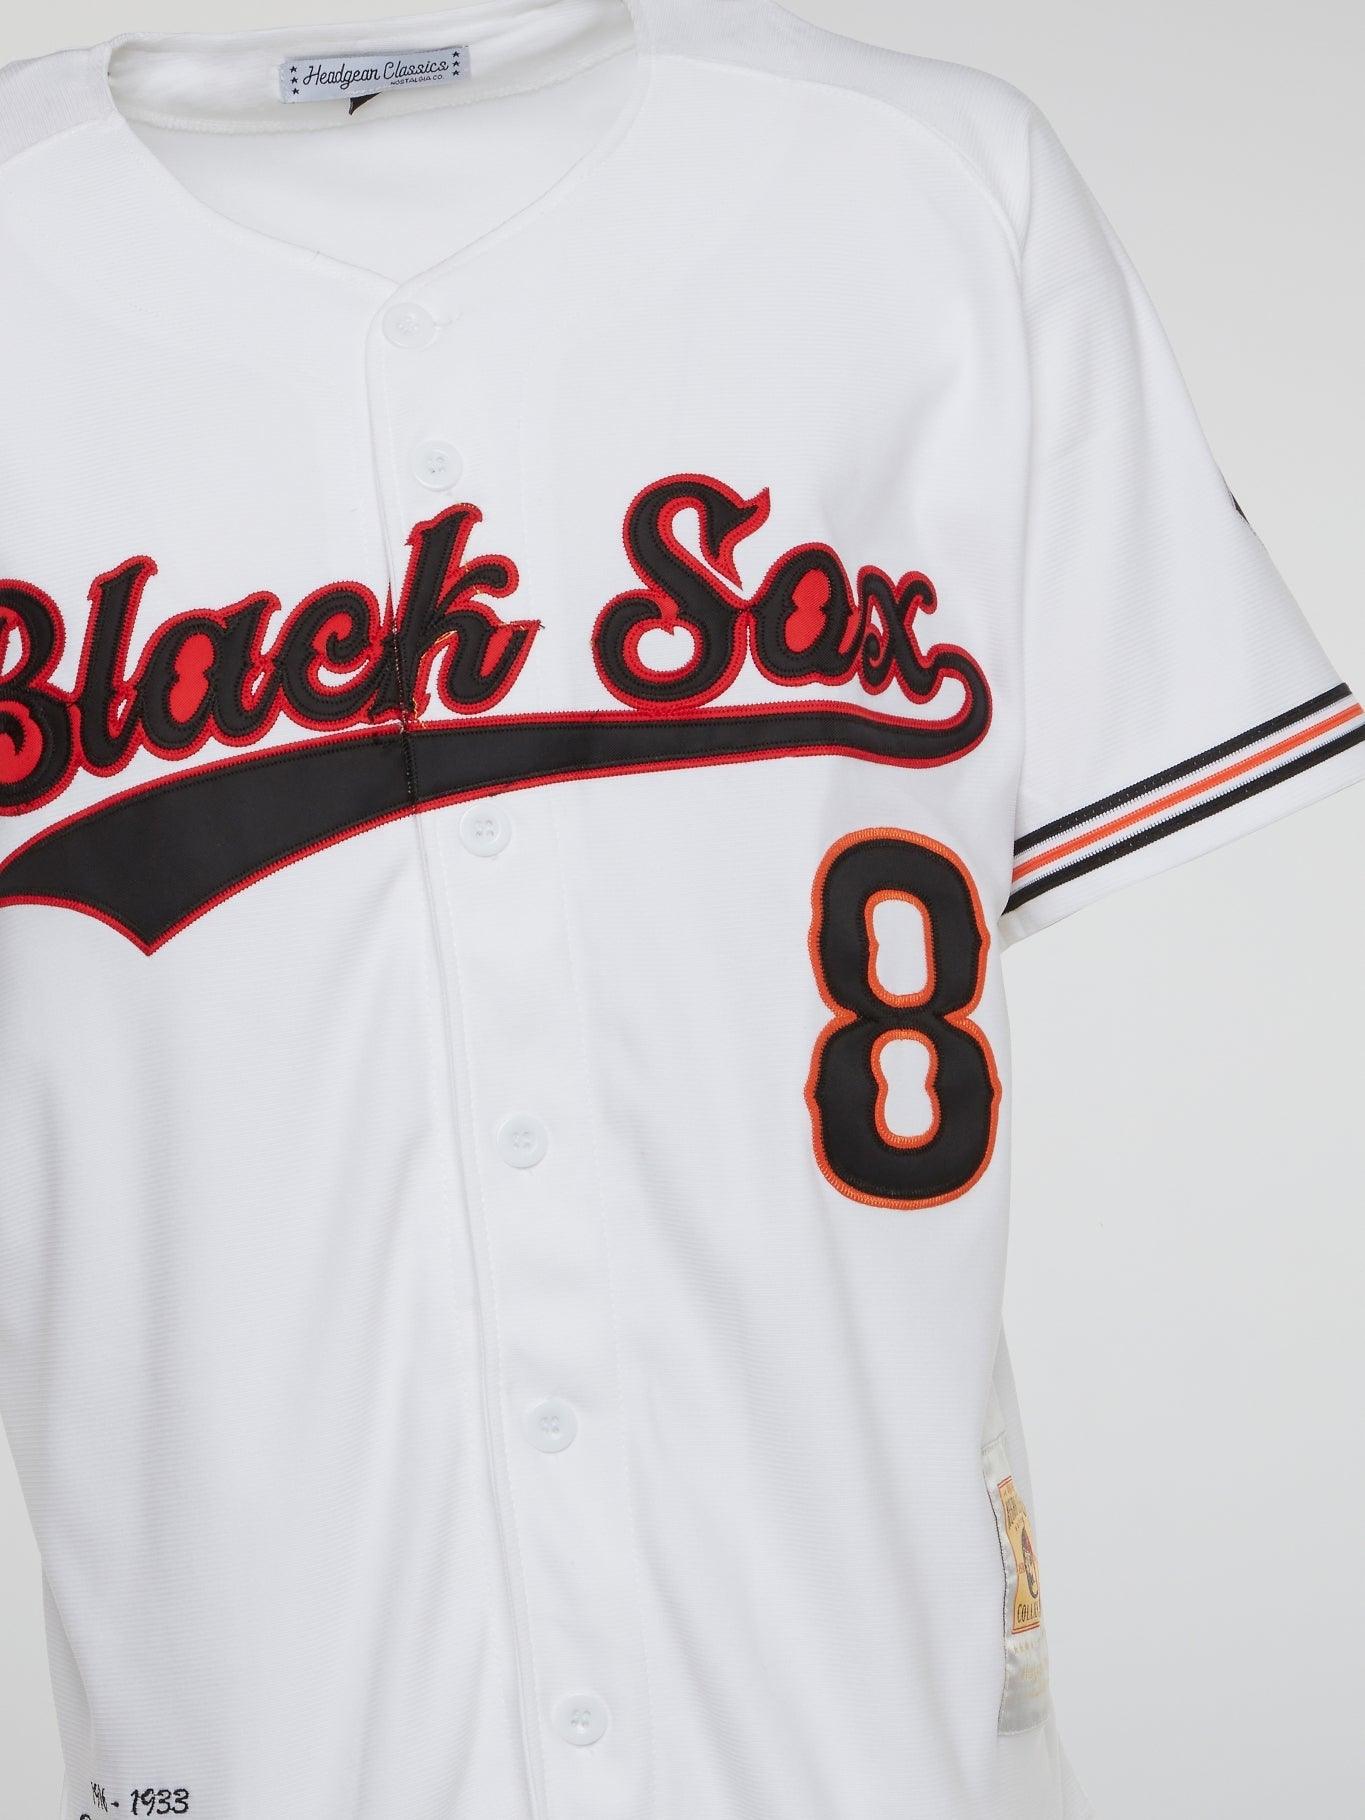 Baltimore Black Sox Baseball Jersey - B-Hype Society